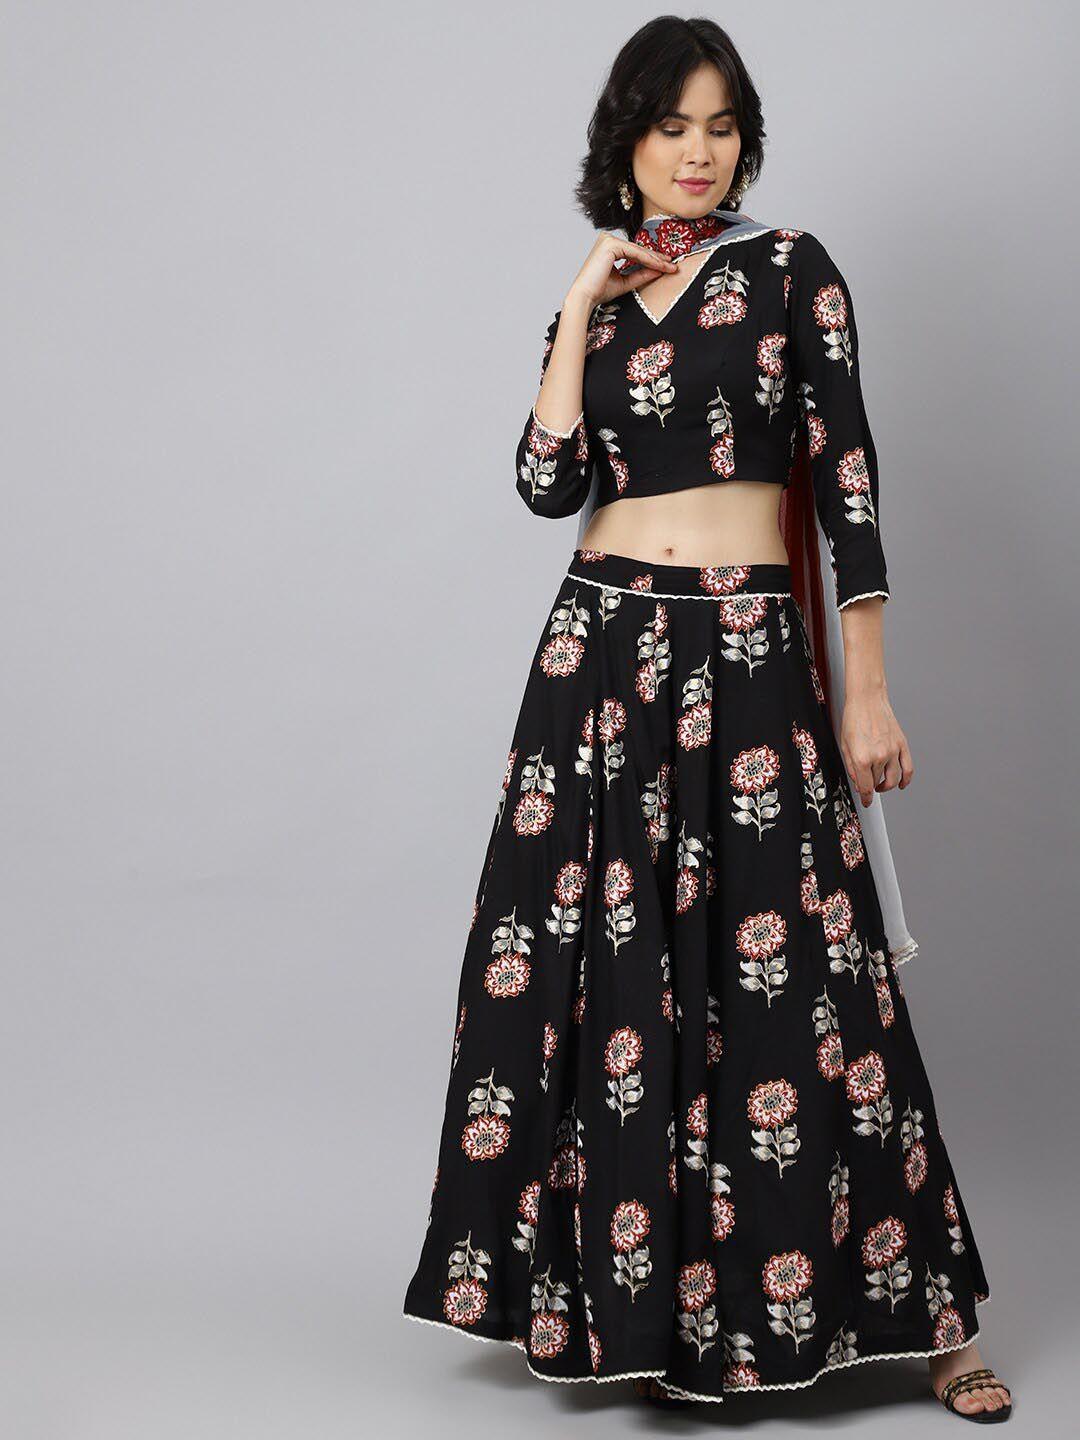 khushal k printed ready to wear lehenga & blouse with dupatta